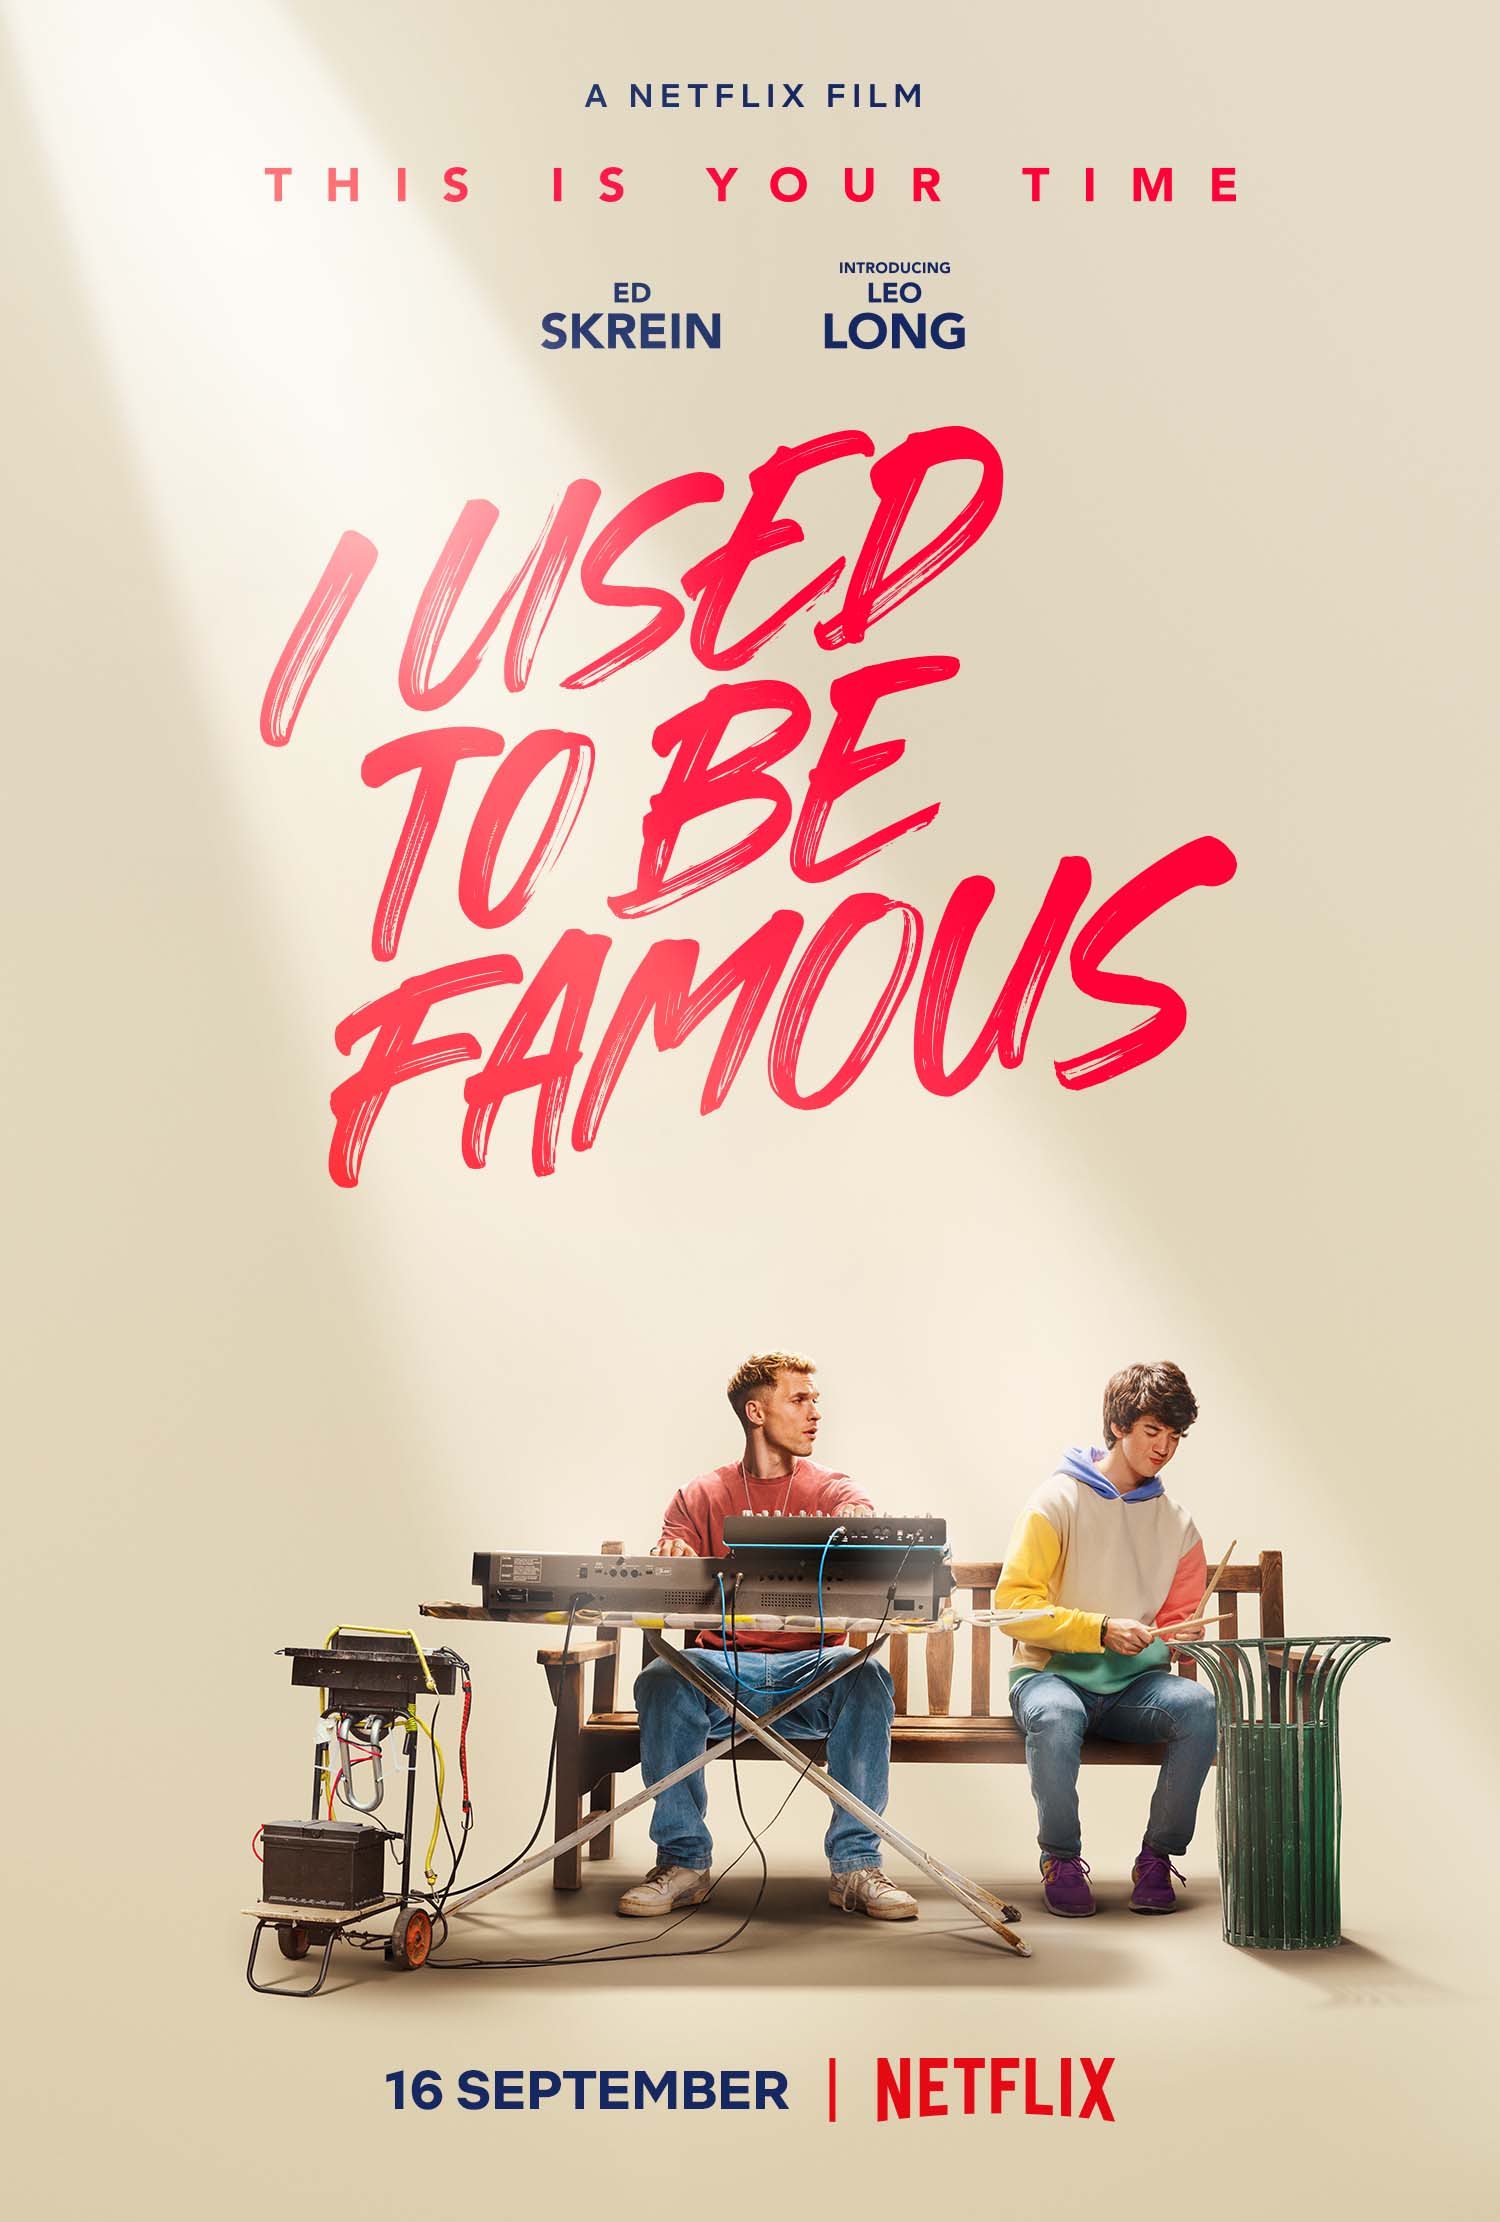 Netflix Trailer : "I Used To Be Famous" zeigt Ed Skrein als ehemaligen Popstar